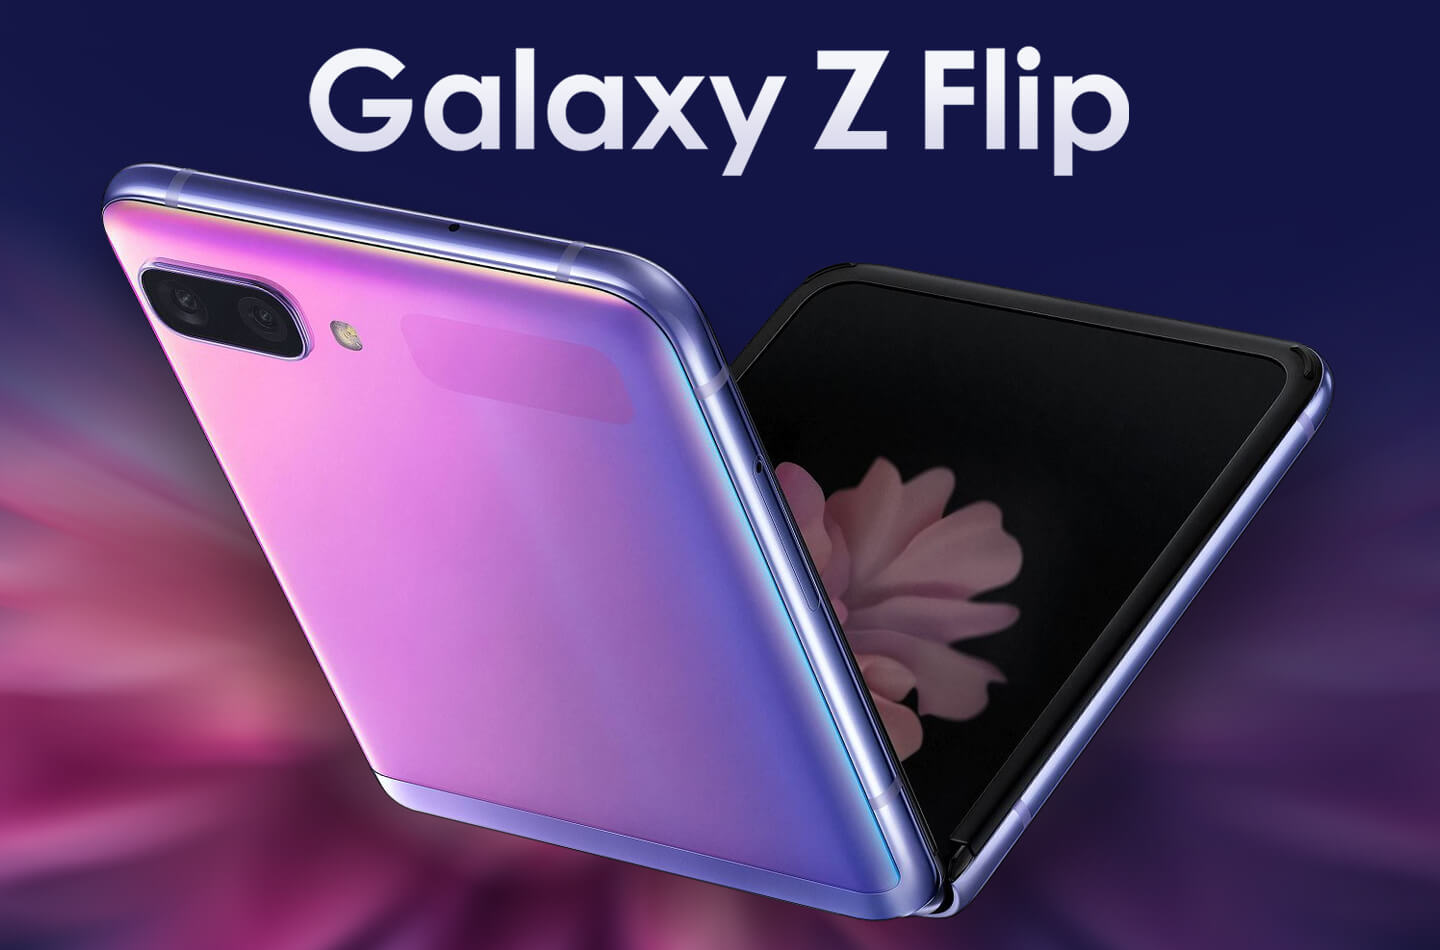 Bevestiging dempen Kritisch Galaxy Z Flip kopen vanaf Valentijnsdag 2020 | LetsGoDigital